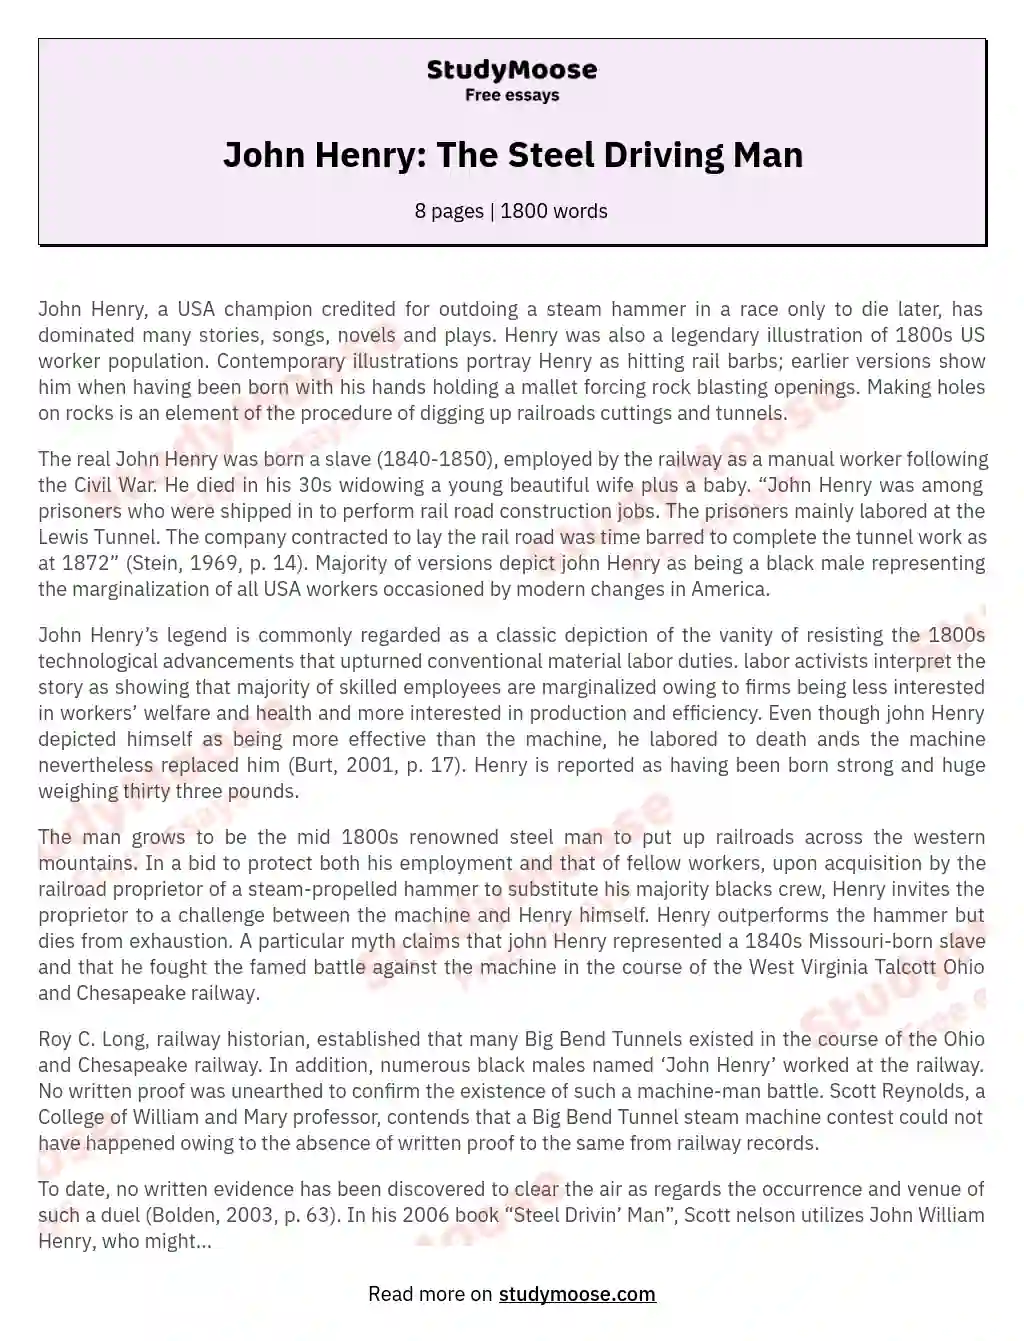 John Henry: The Steel Driving Man essay